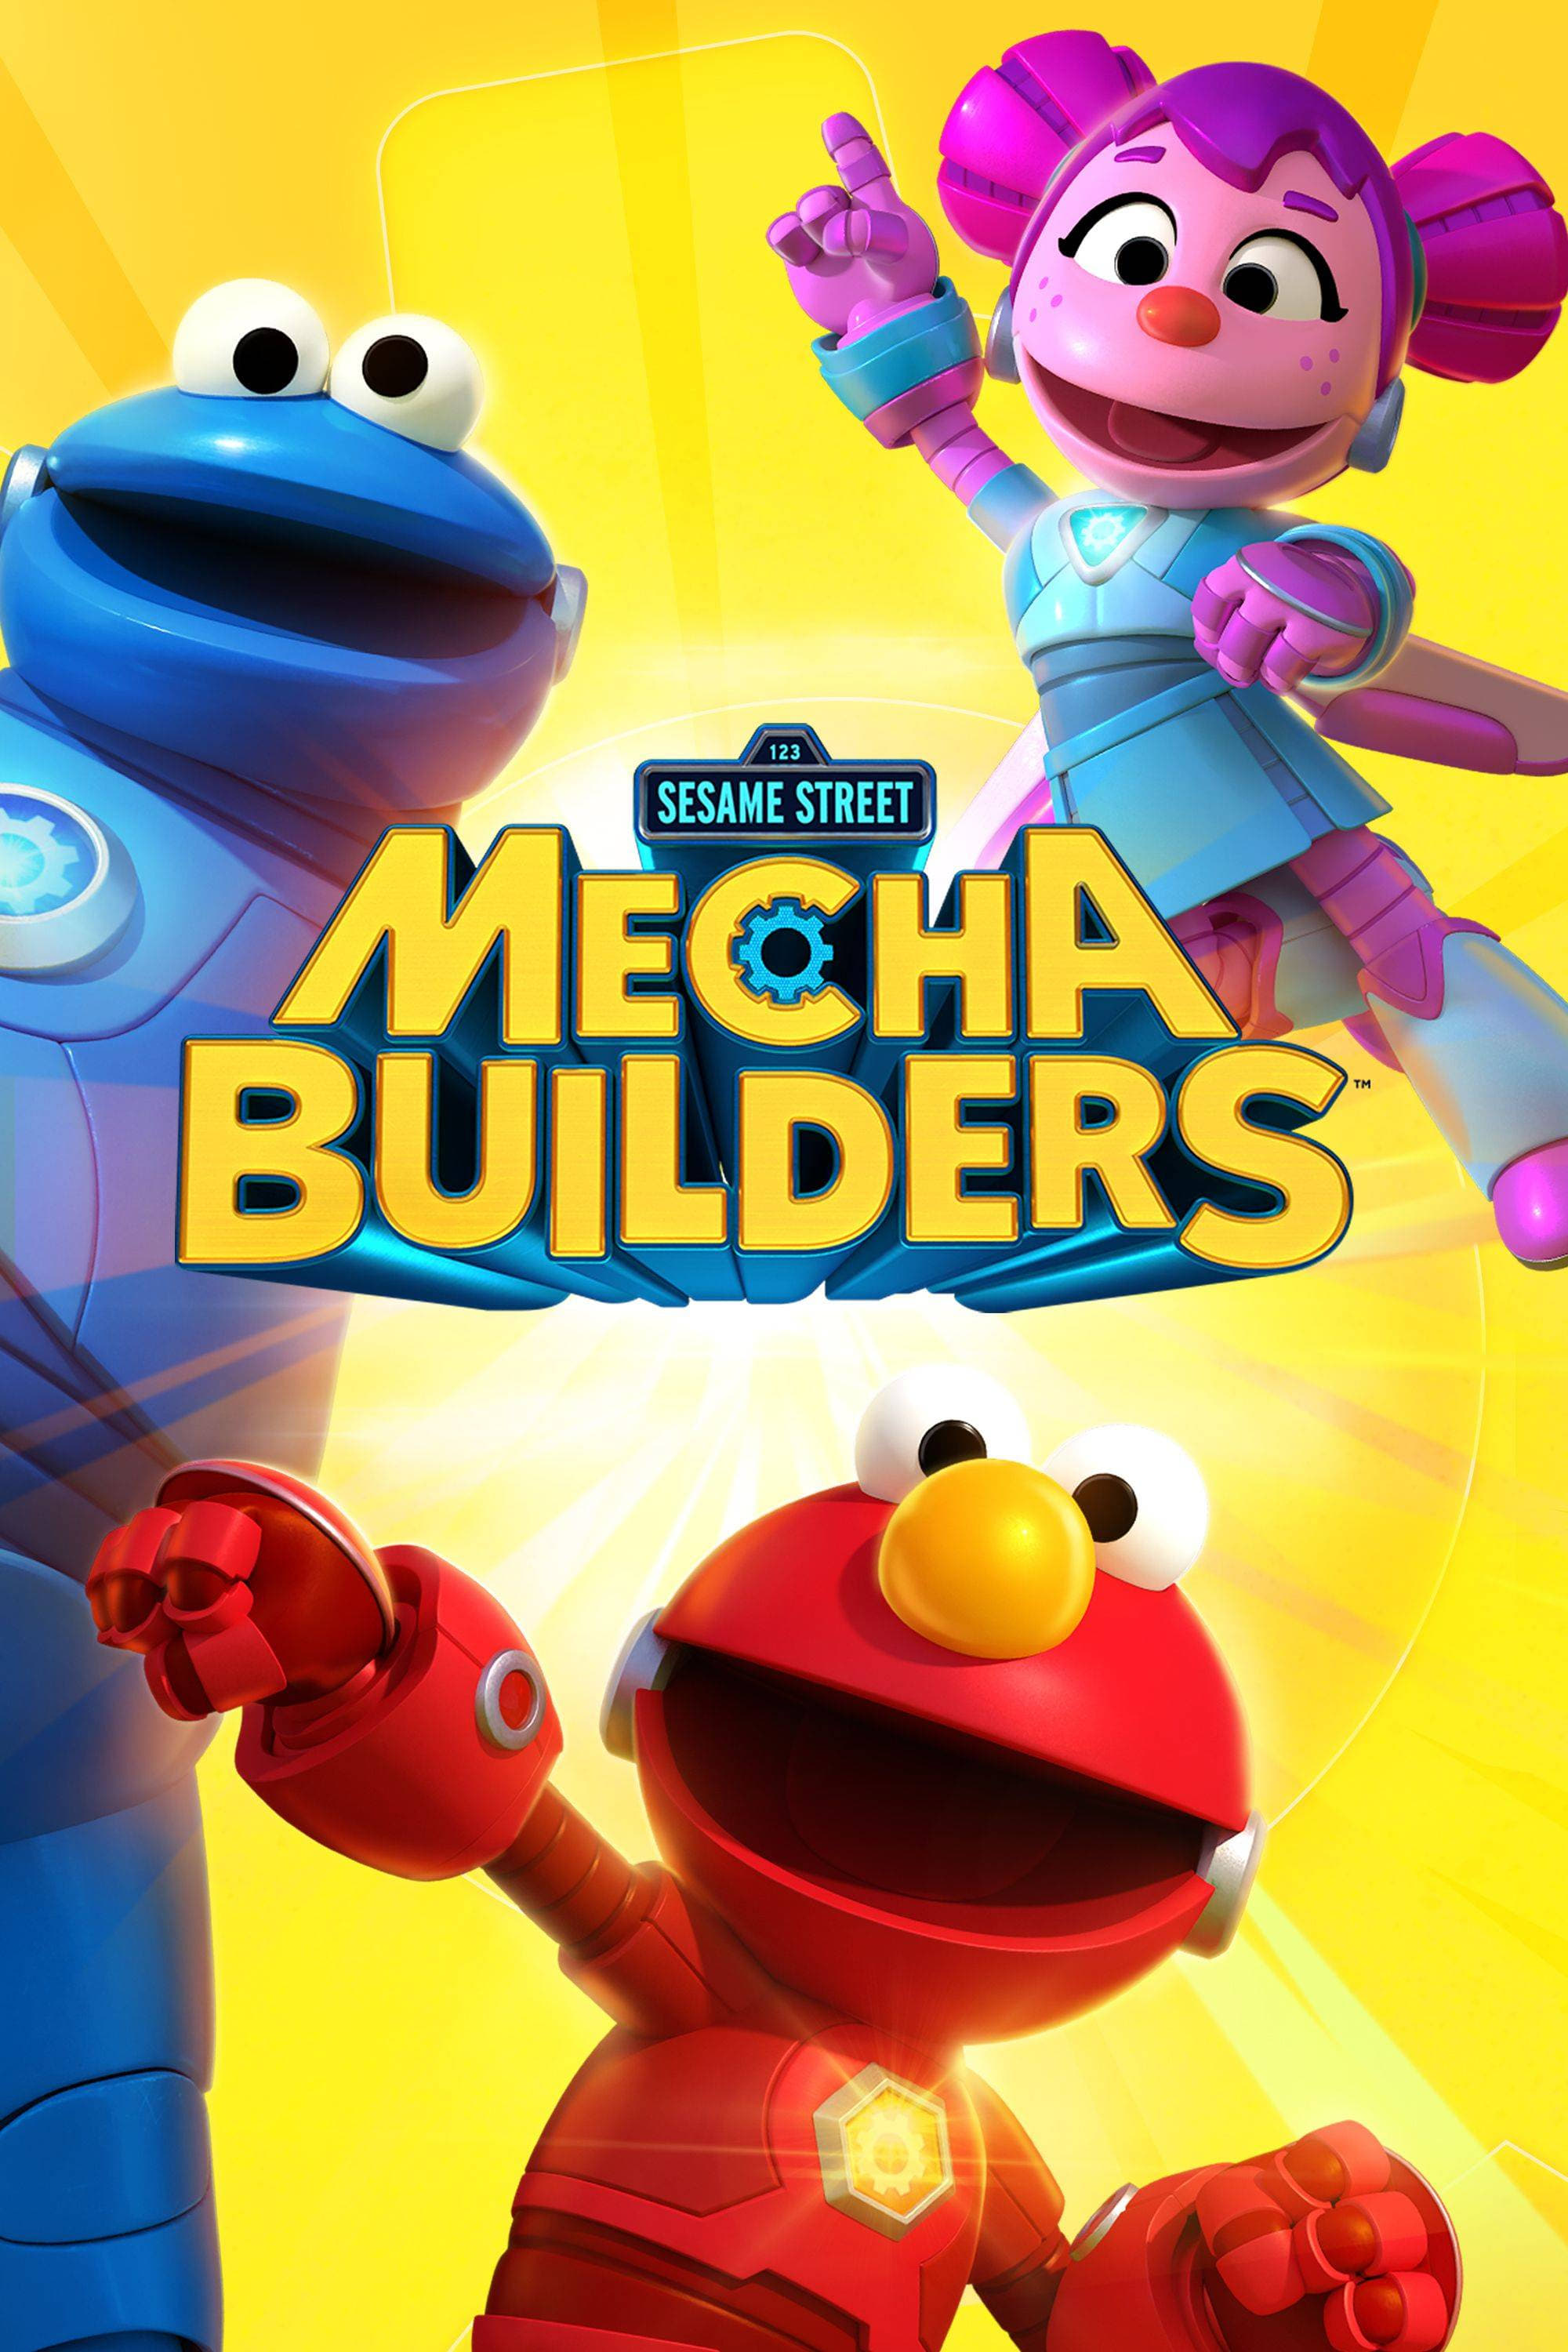 Mecha Builders TV Shows About Superhero Team